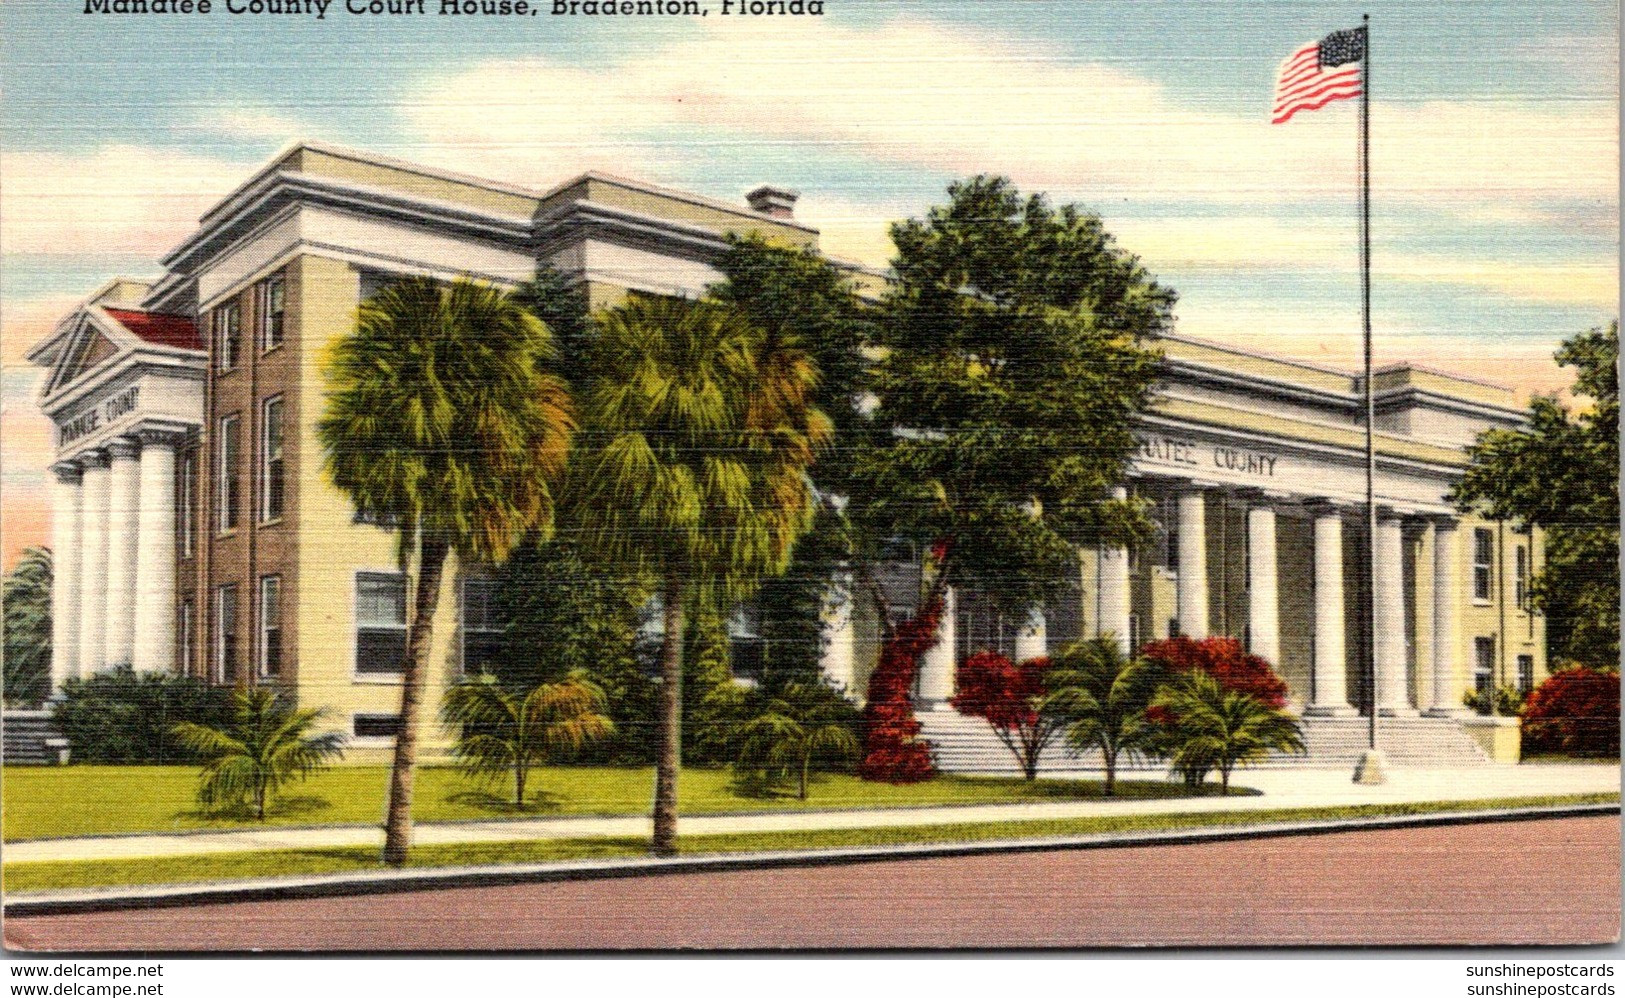 Florida Bradenton Manatee County Court House - Bradenton